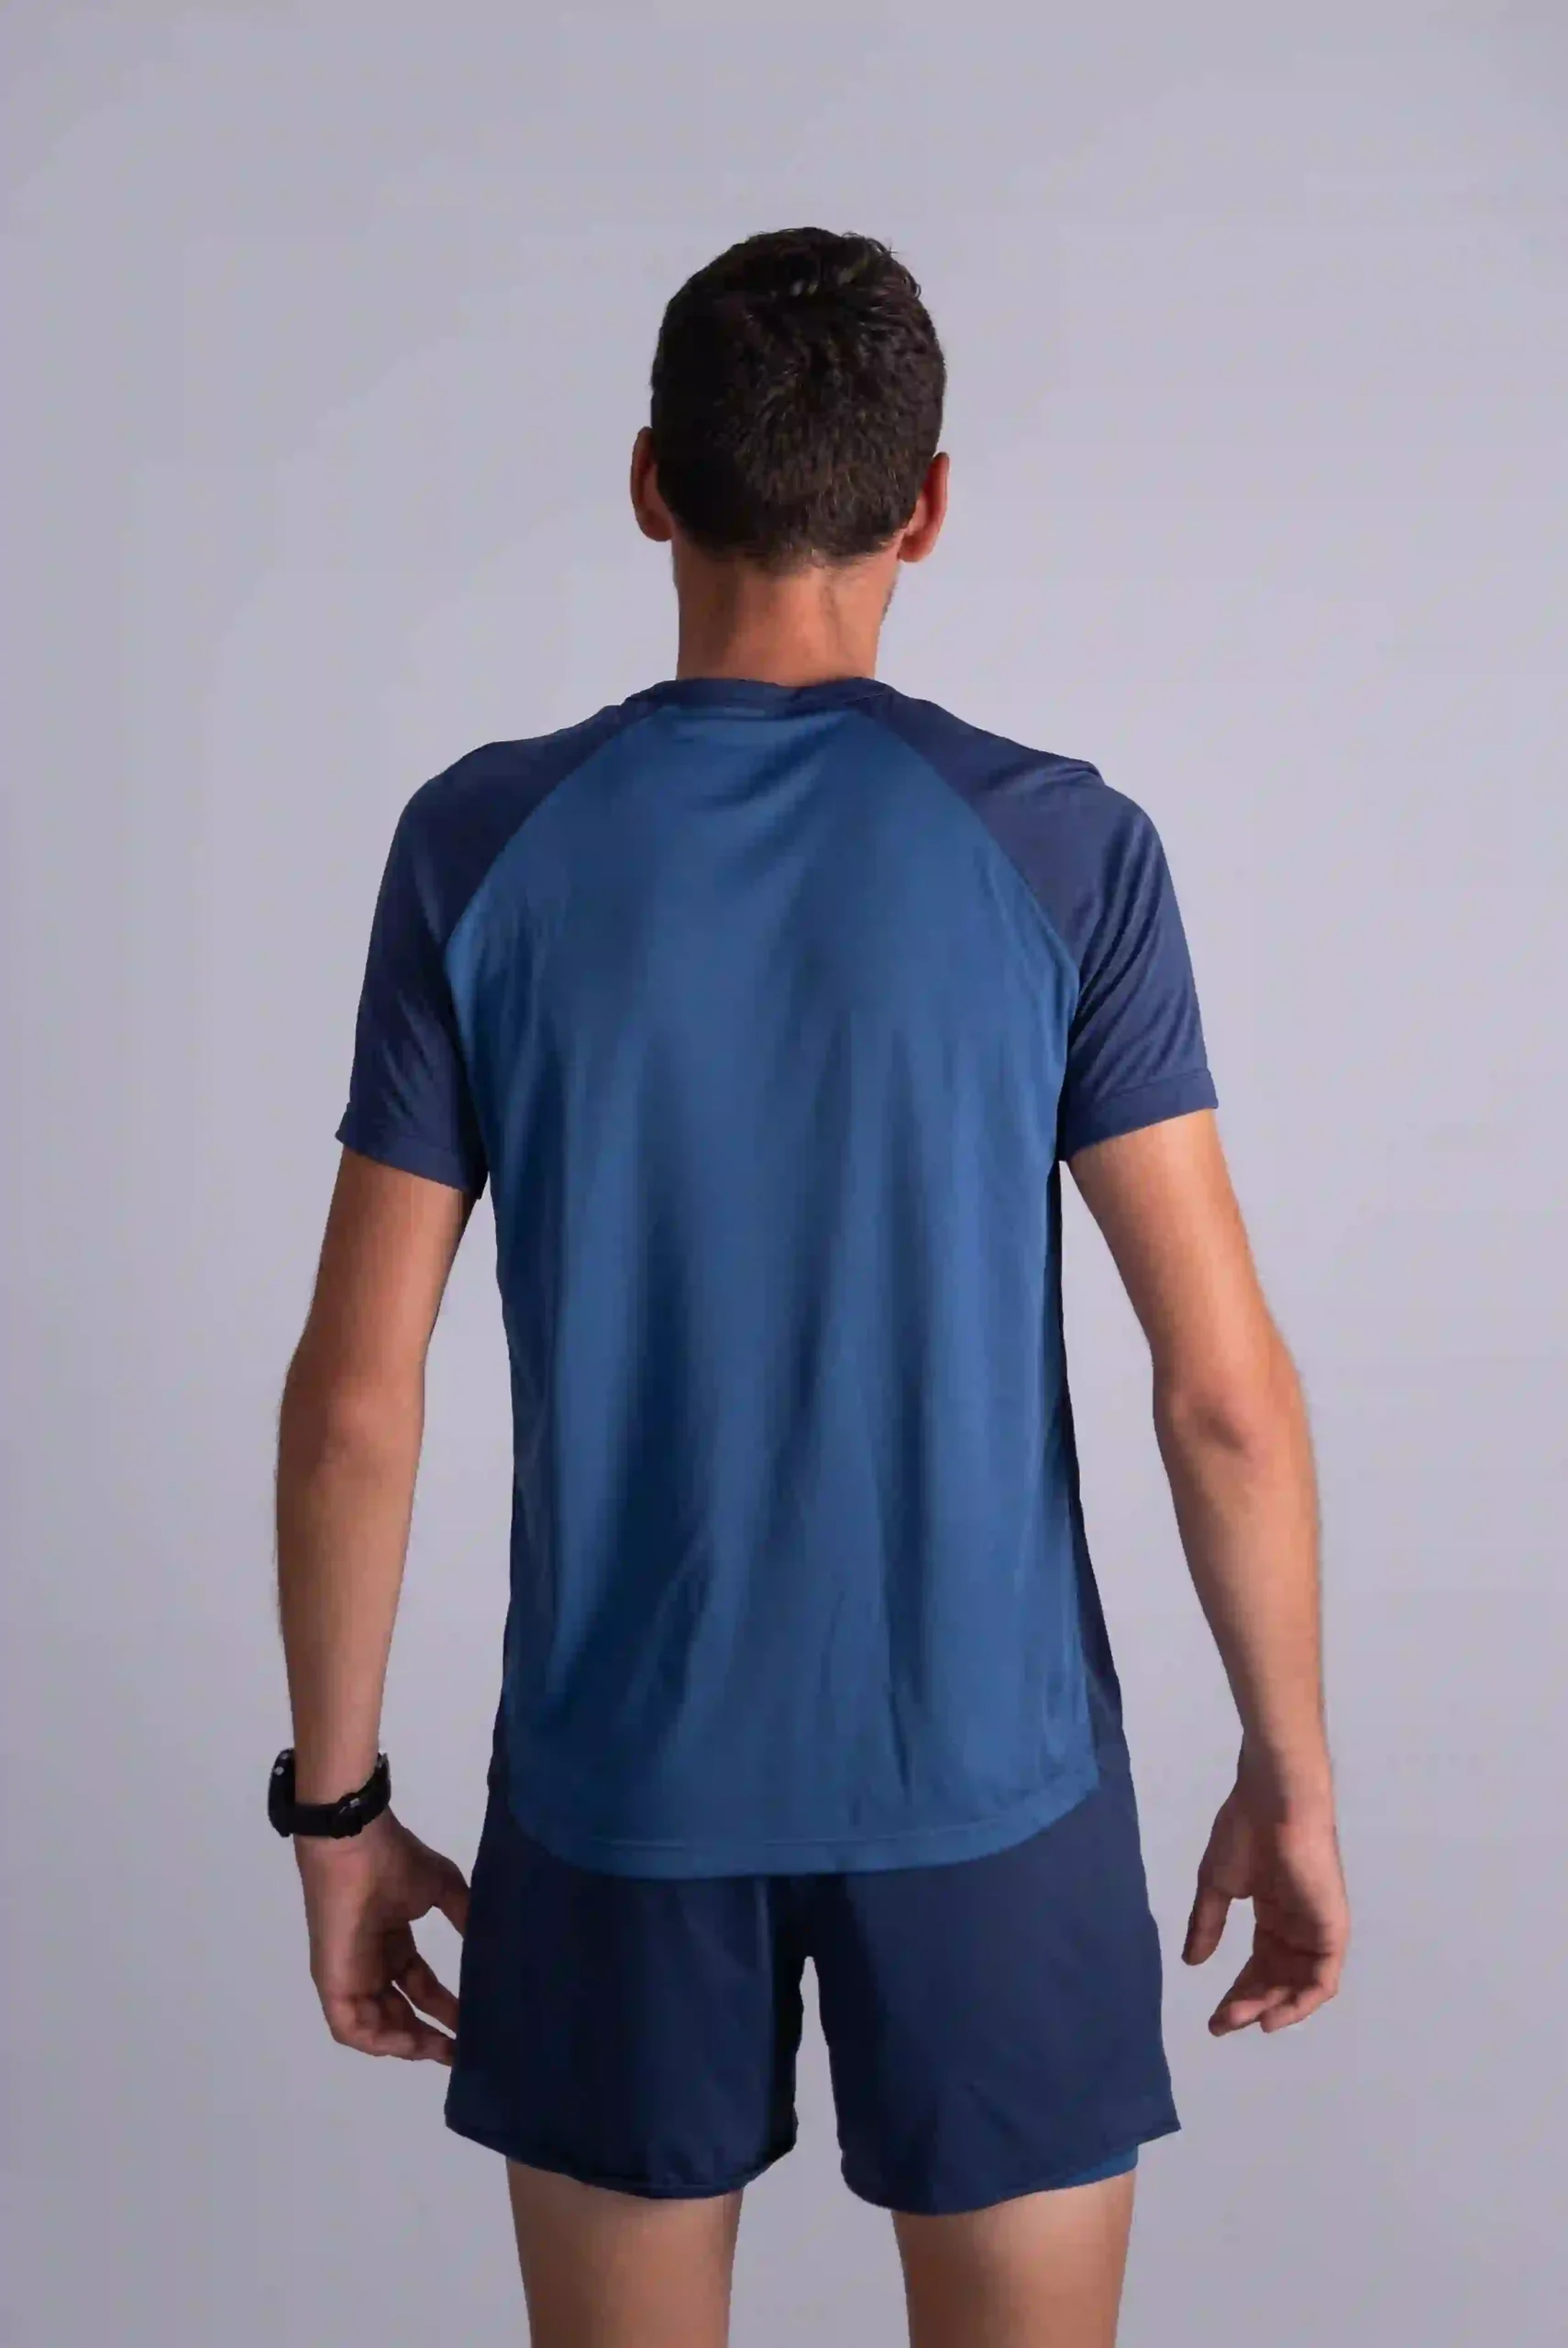 T-shirt trail running homme - Muntanya - Vêtements Running Trail